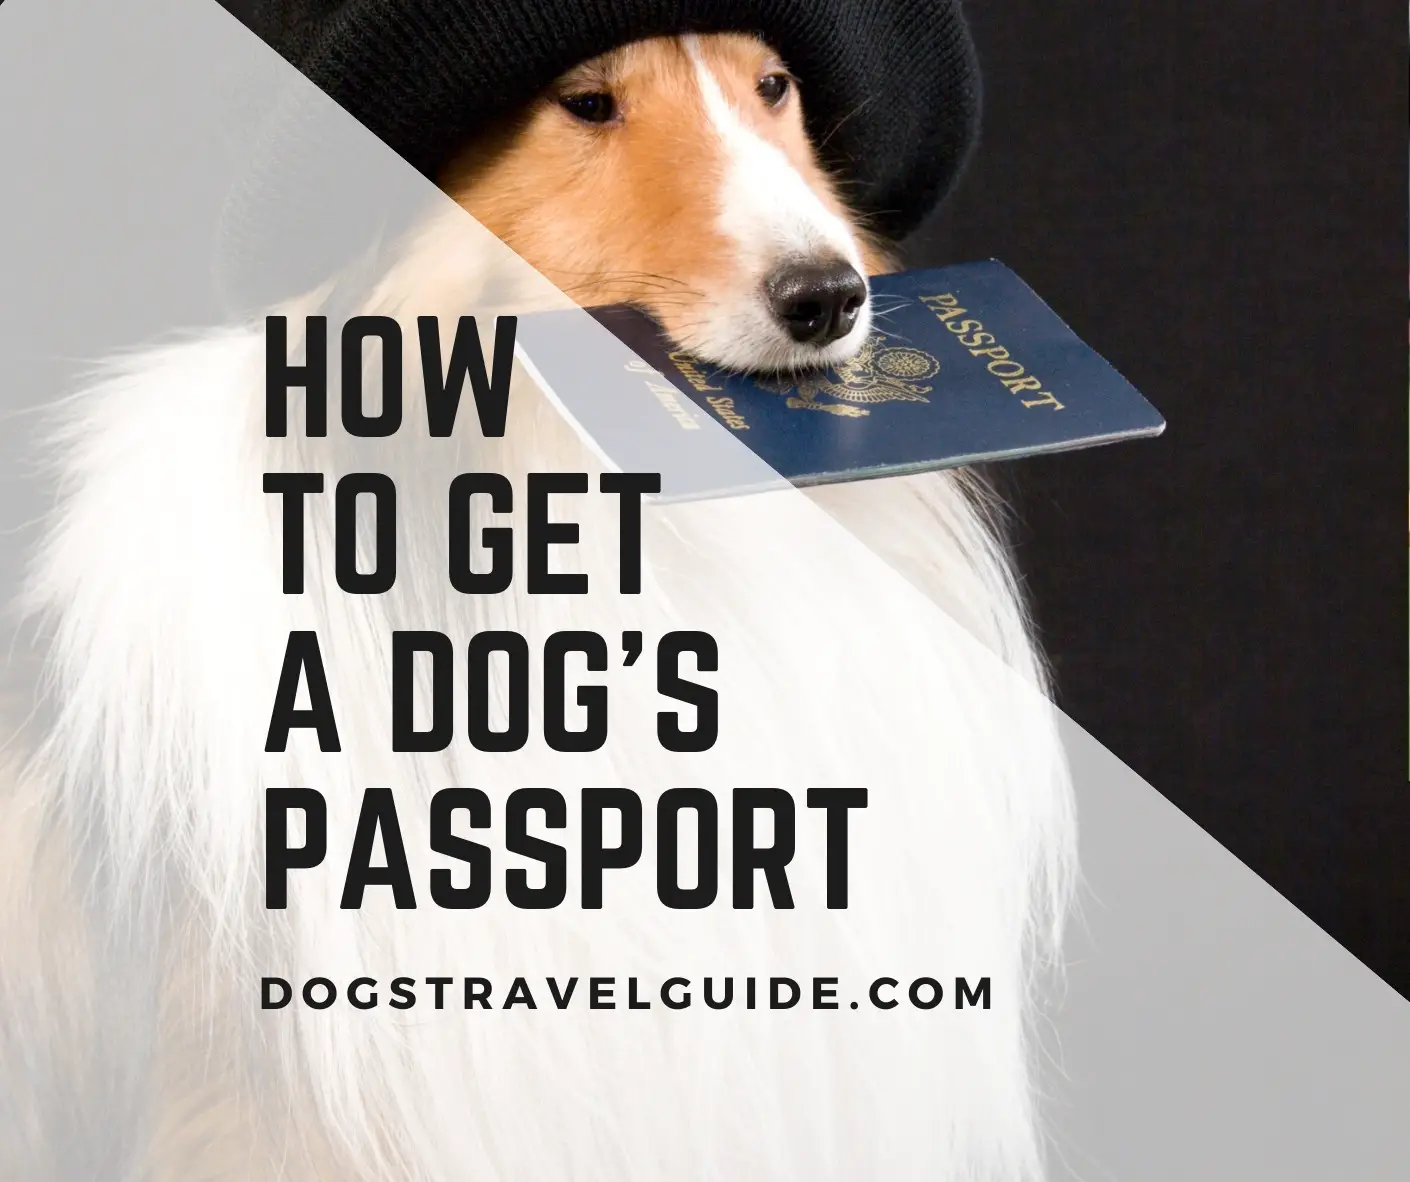 travel passport for dog